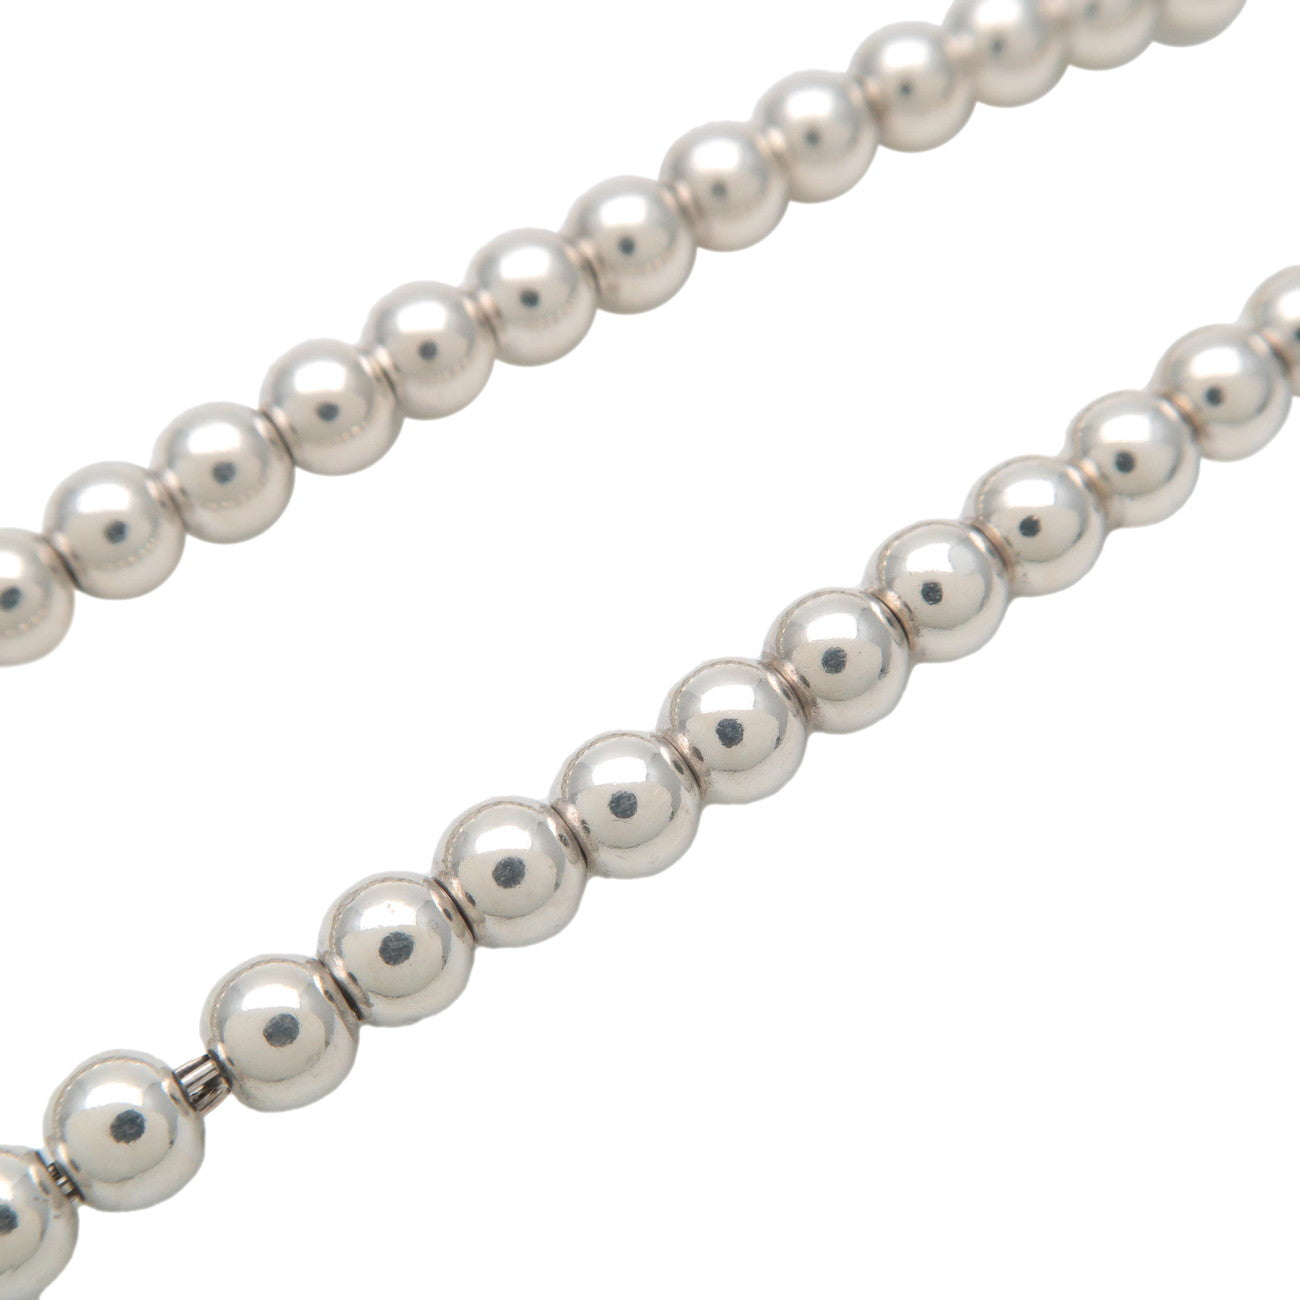 Tiffany&Co. Return To Tiffany Heart Tag Bracelet Silver 925